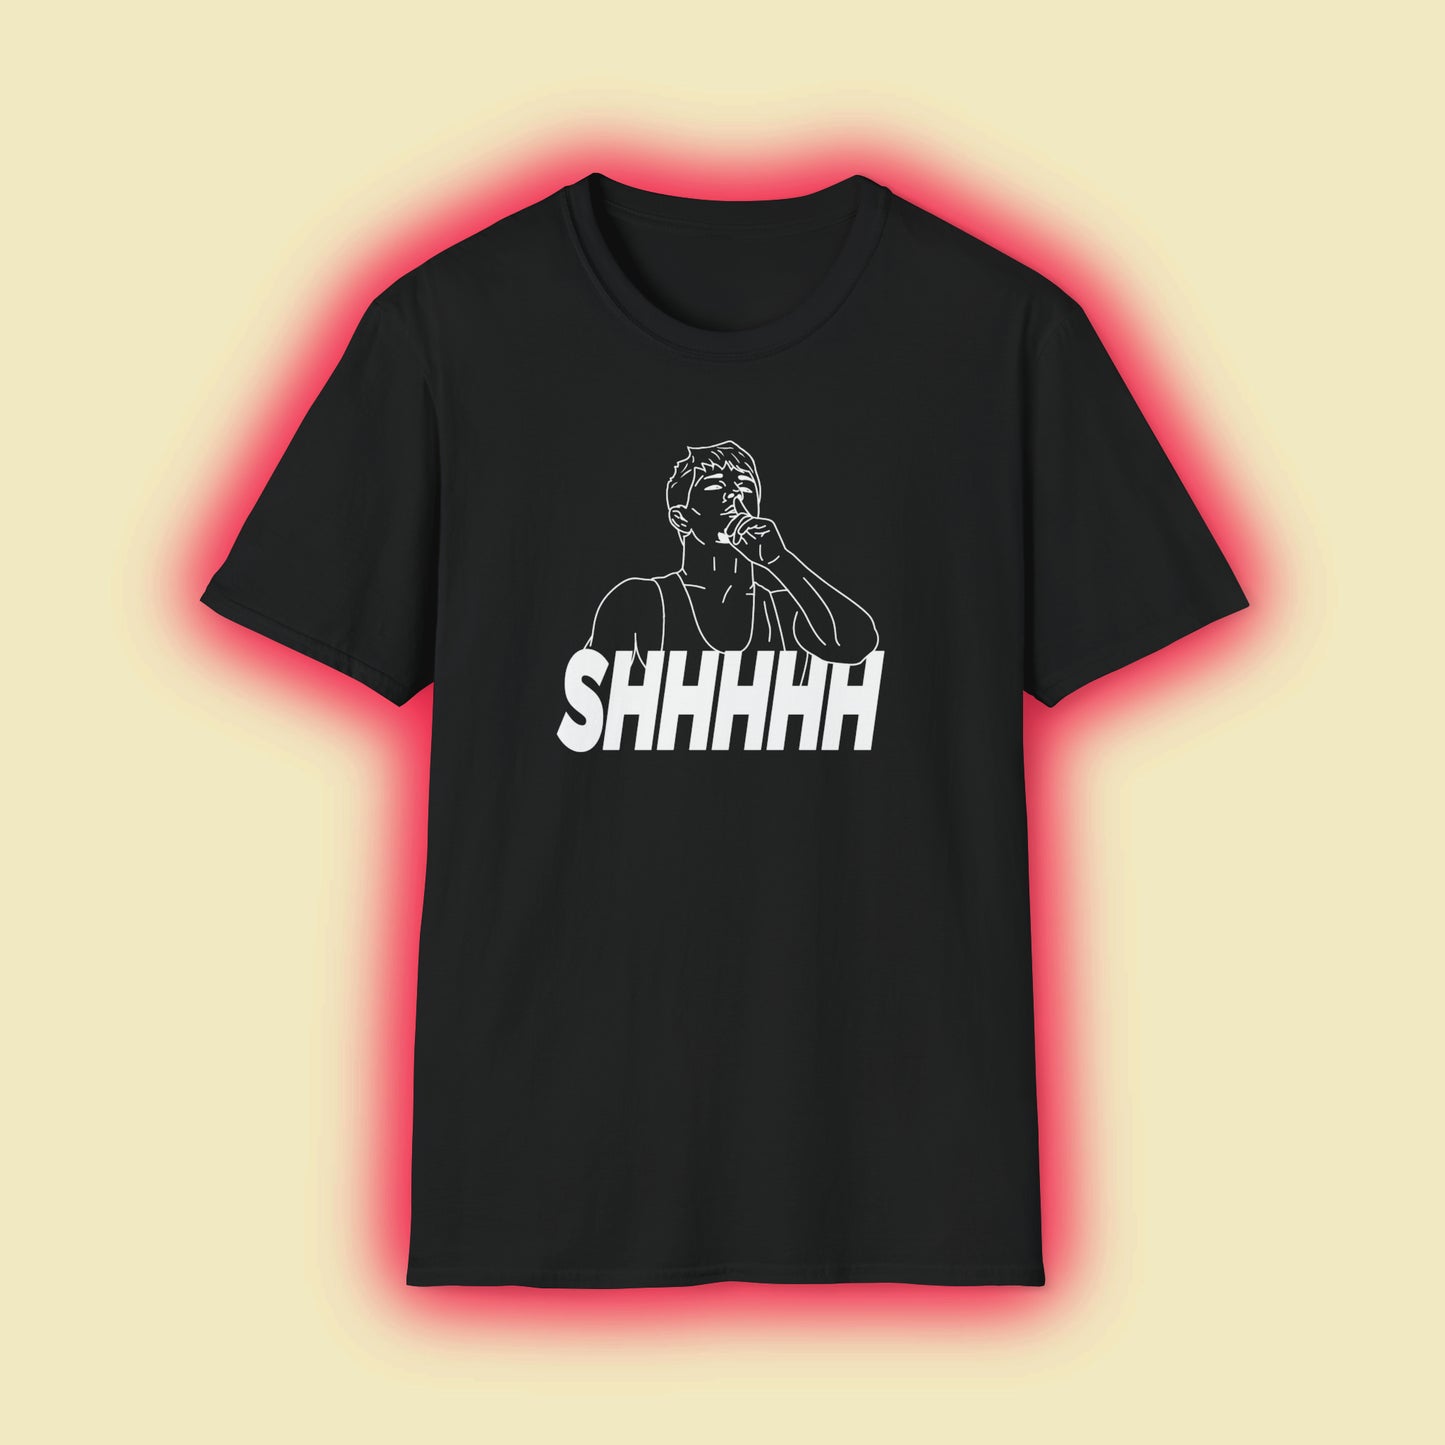 Jore Volk "SHHHHH" Shirt